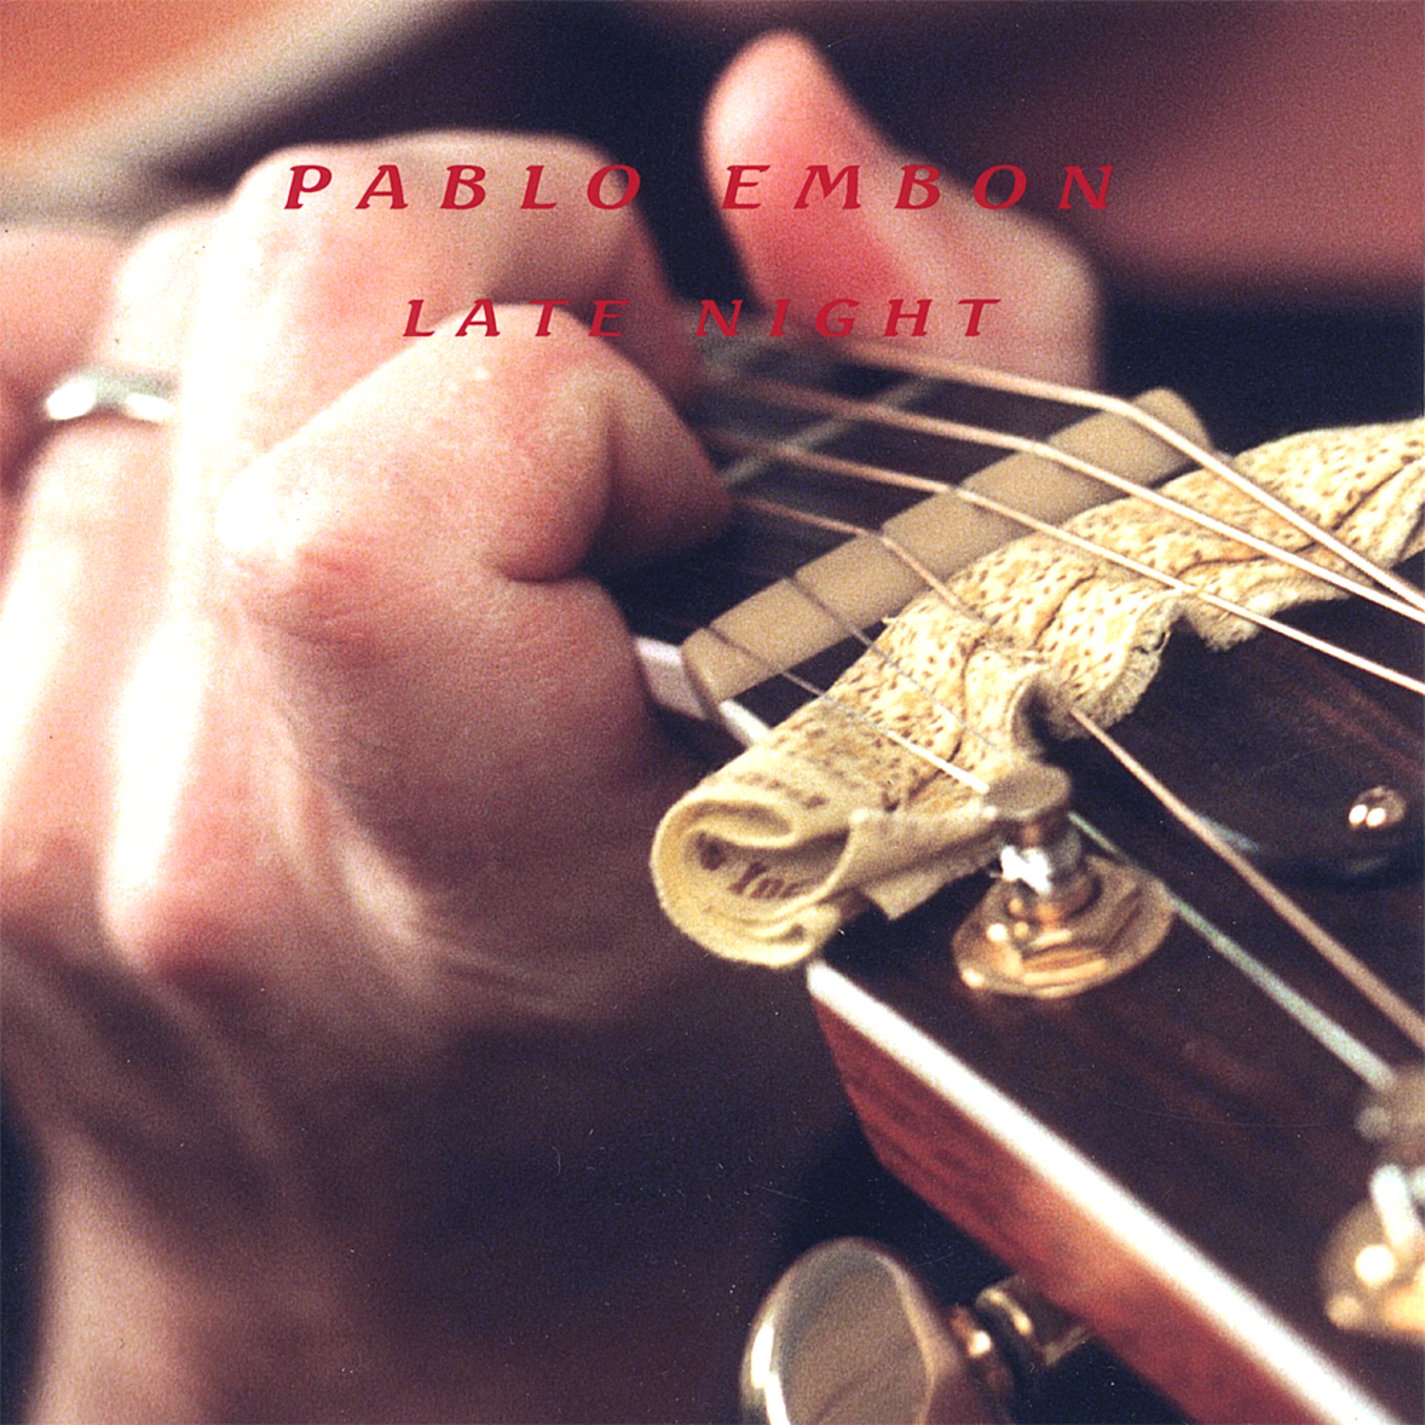 Pablo Embon — Late Night